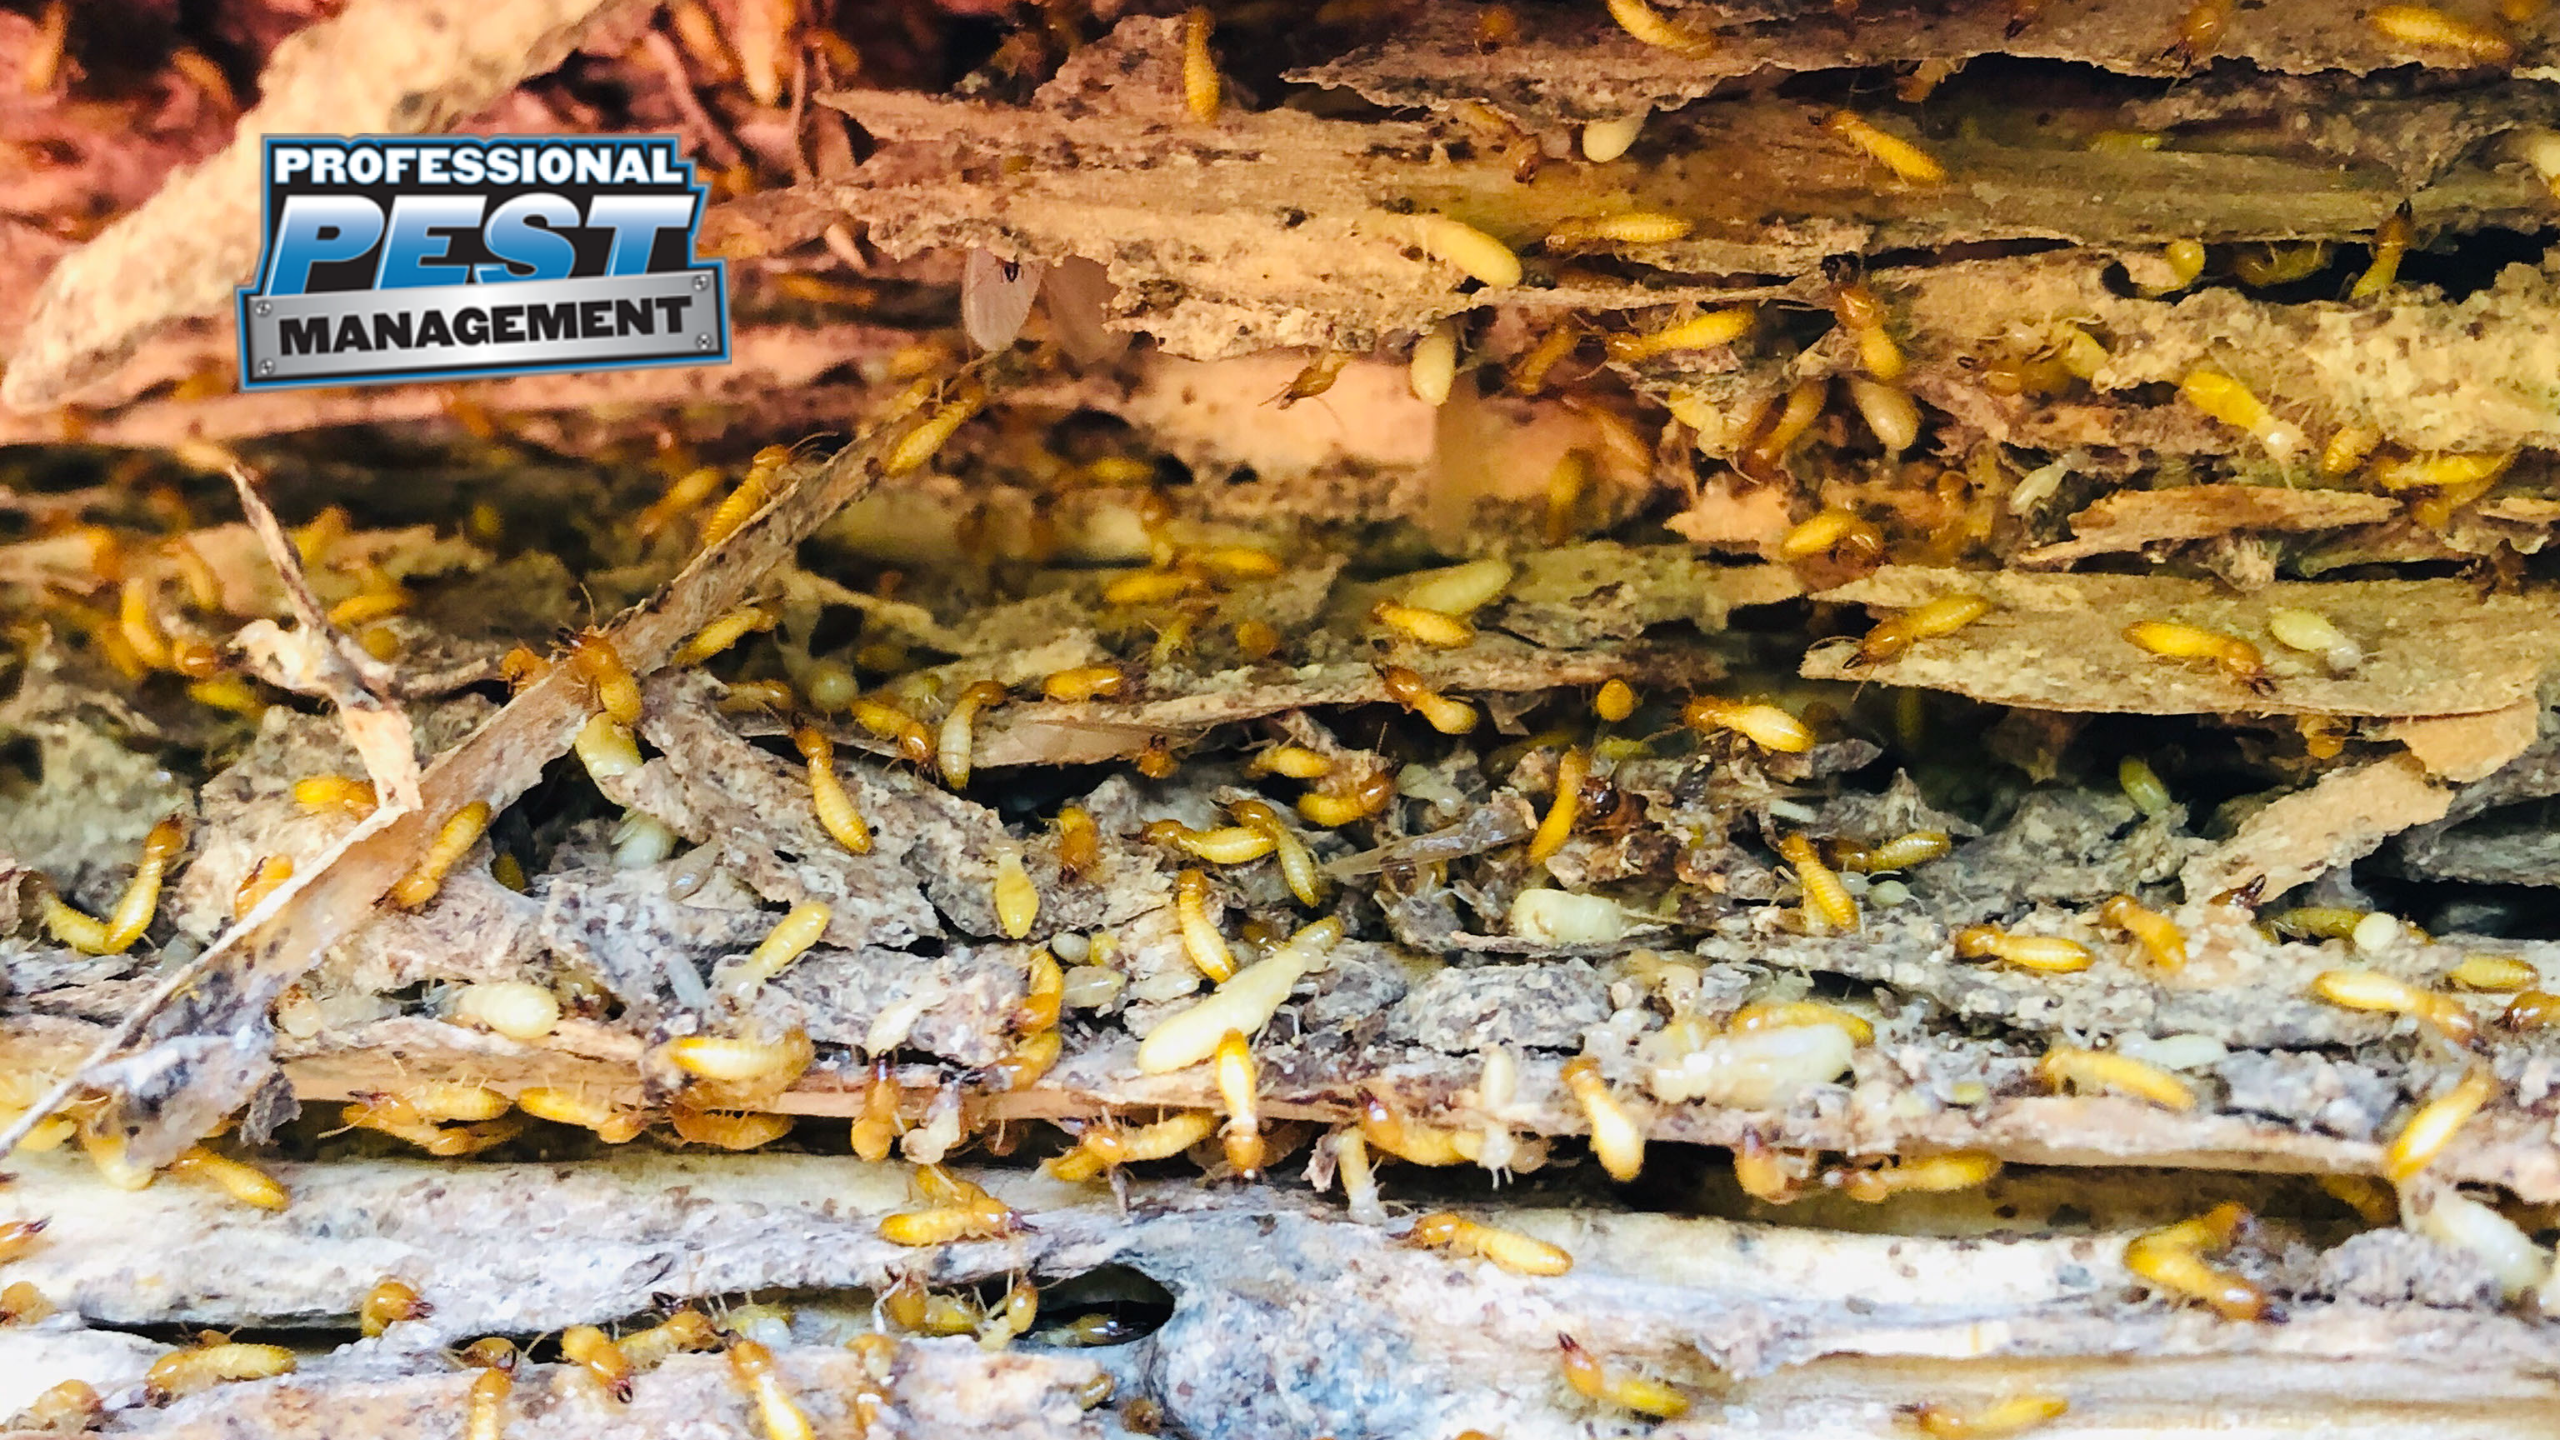 Subterranean Termites Chew Up Wood!